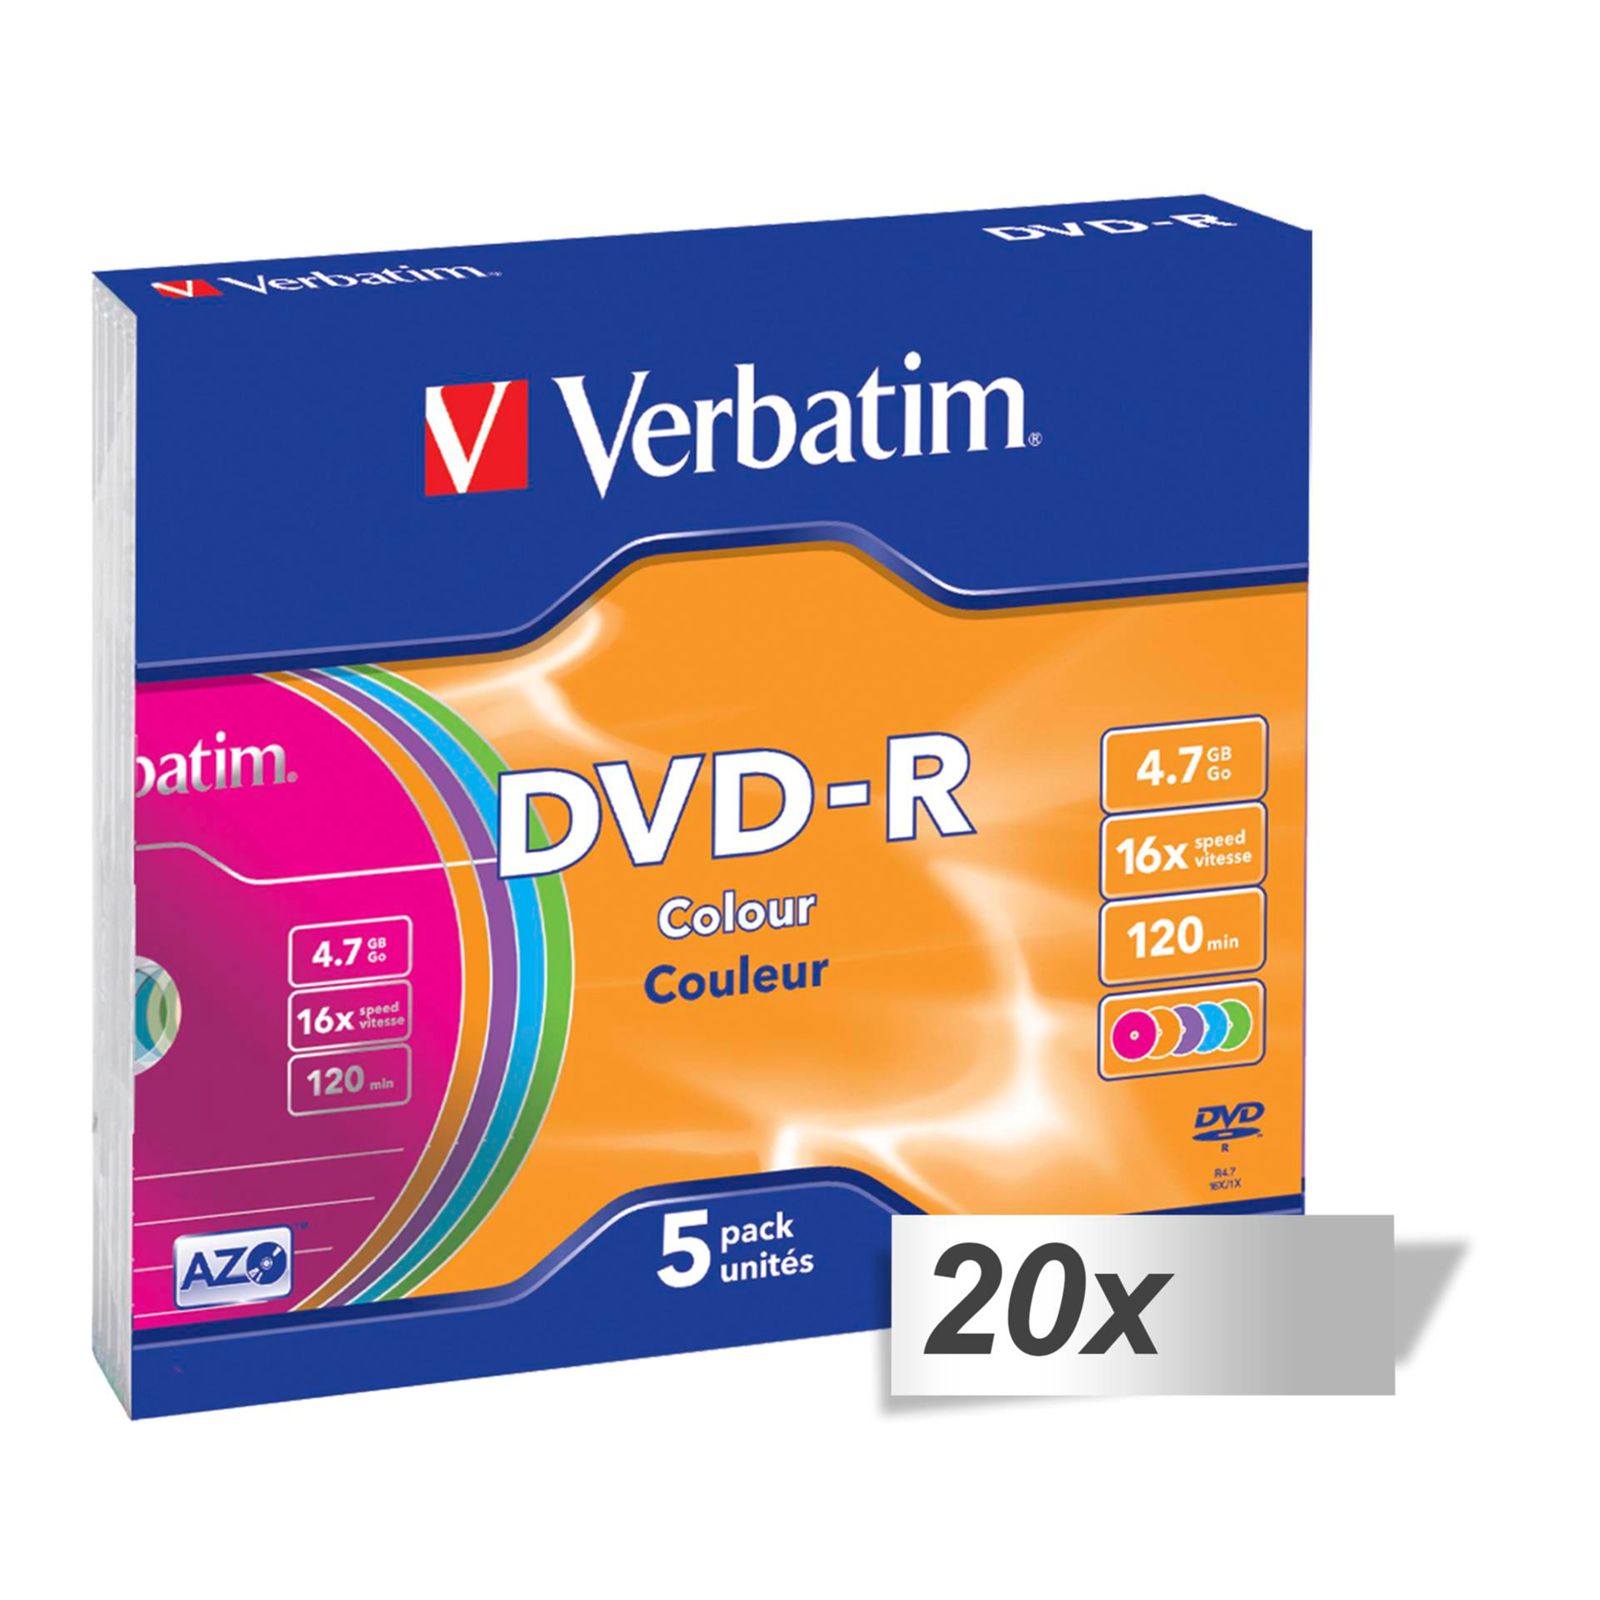 20x5 Verbatim DVD-R 4,7GB Colour 16x Speed, Slim custodia